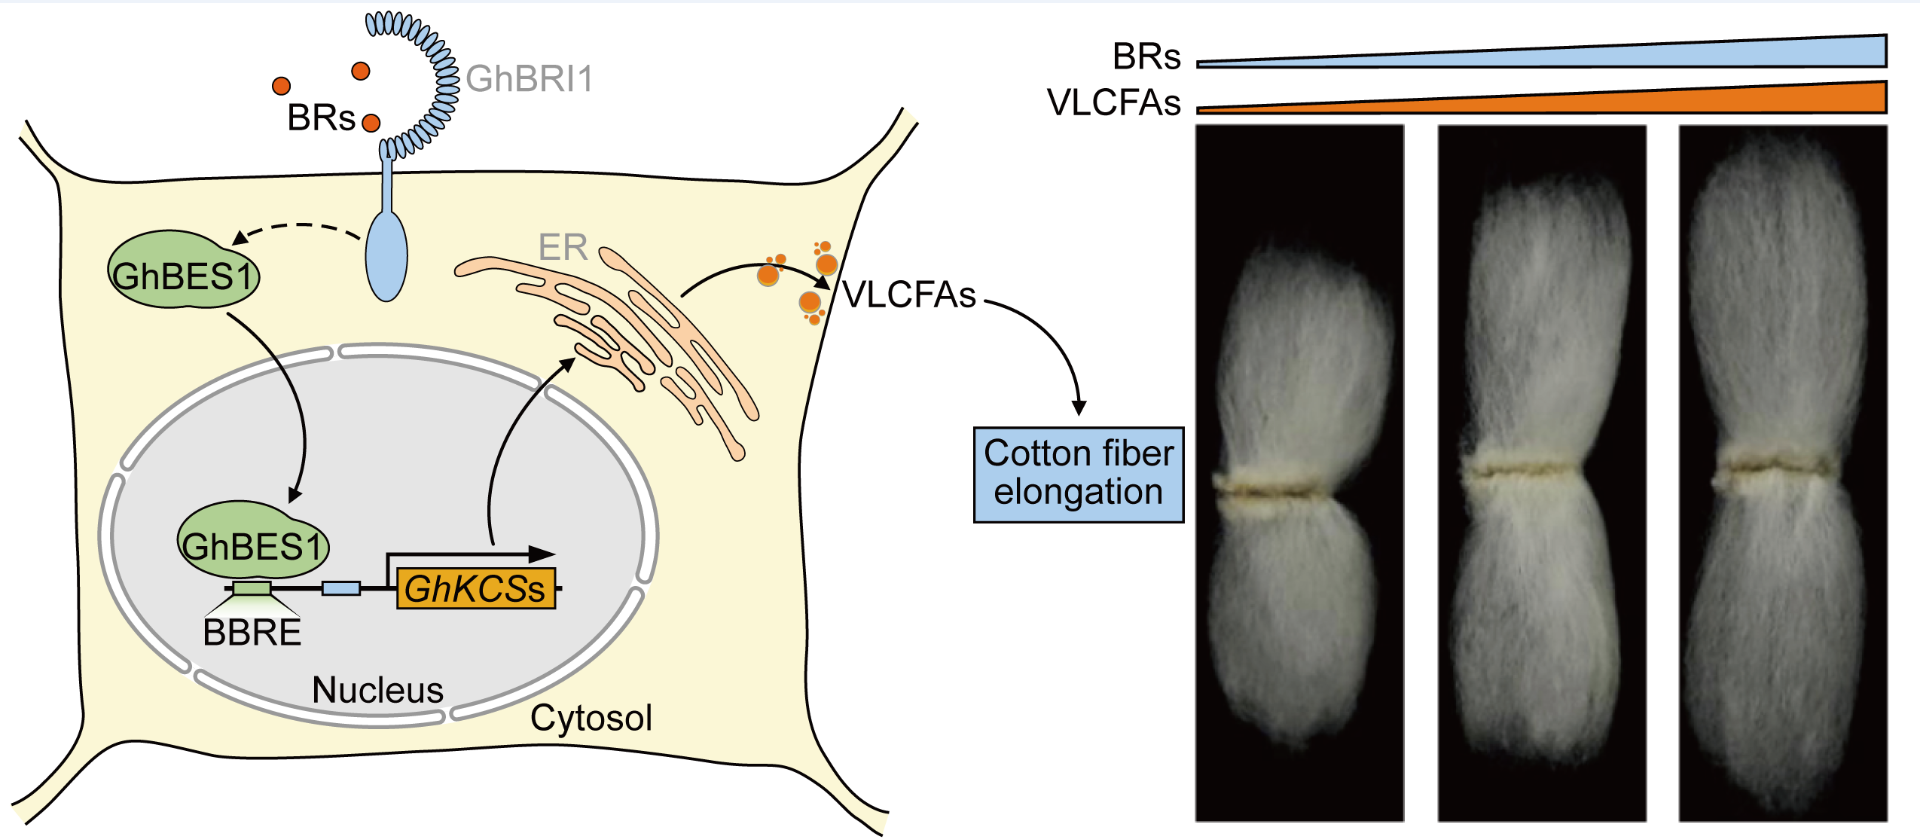 Brassinosteroids regulate cotton fiber elongation by modulating very-long-chain fatty acid biosynthesis